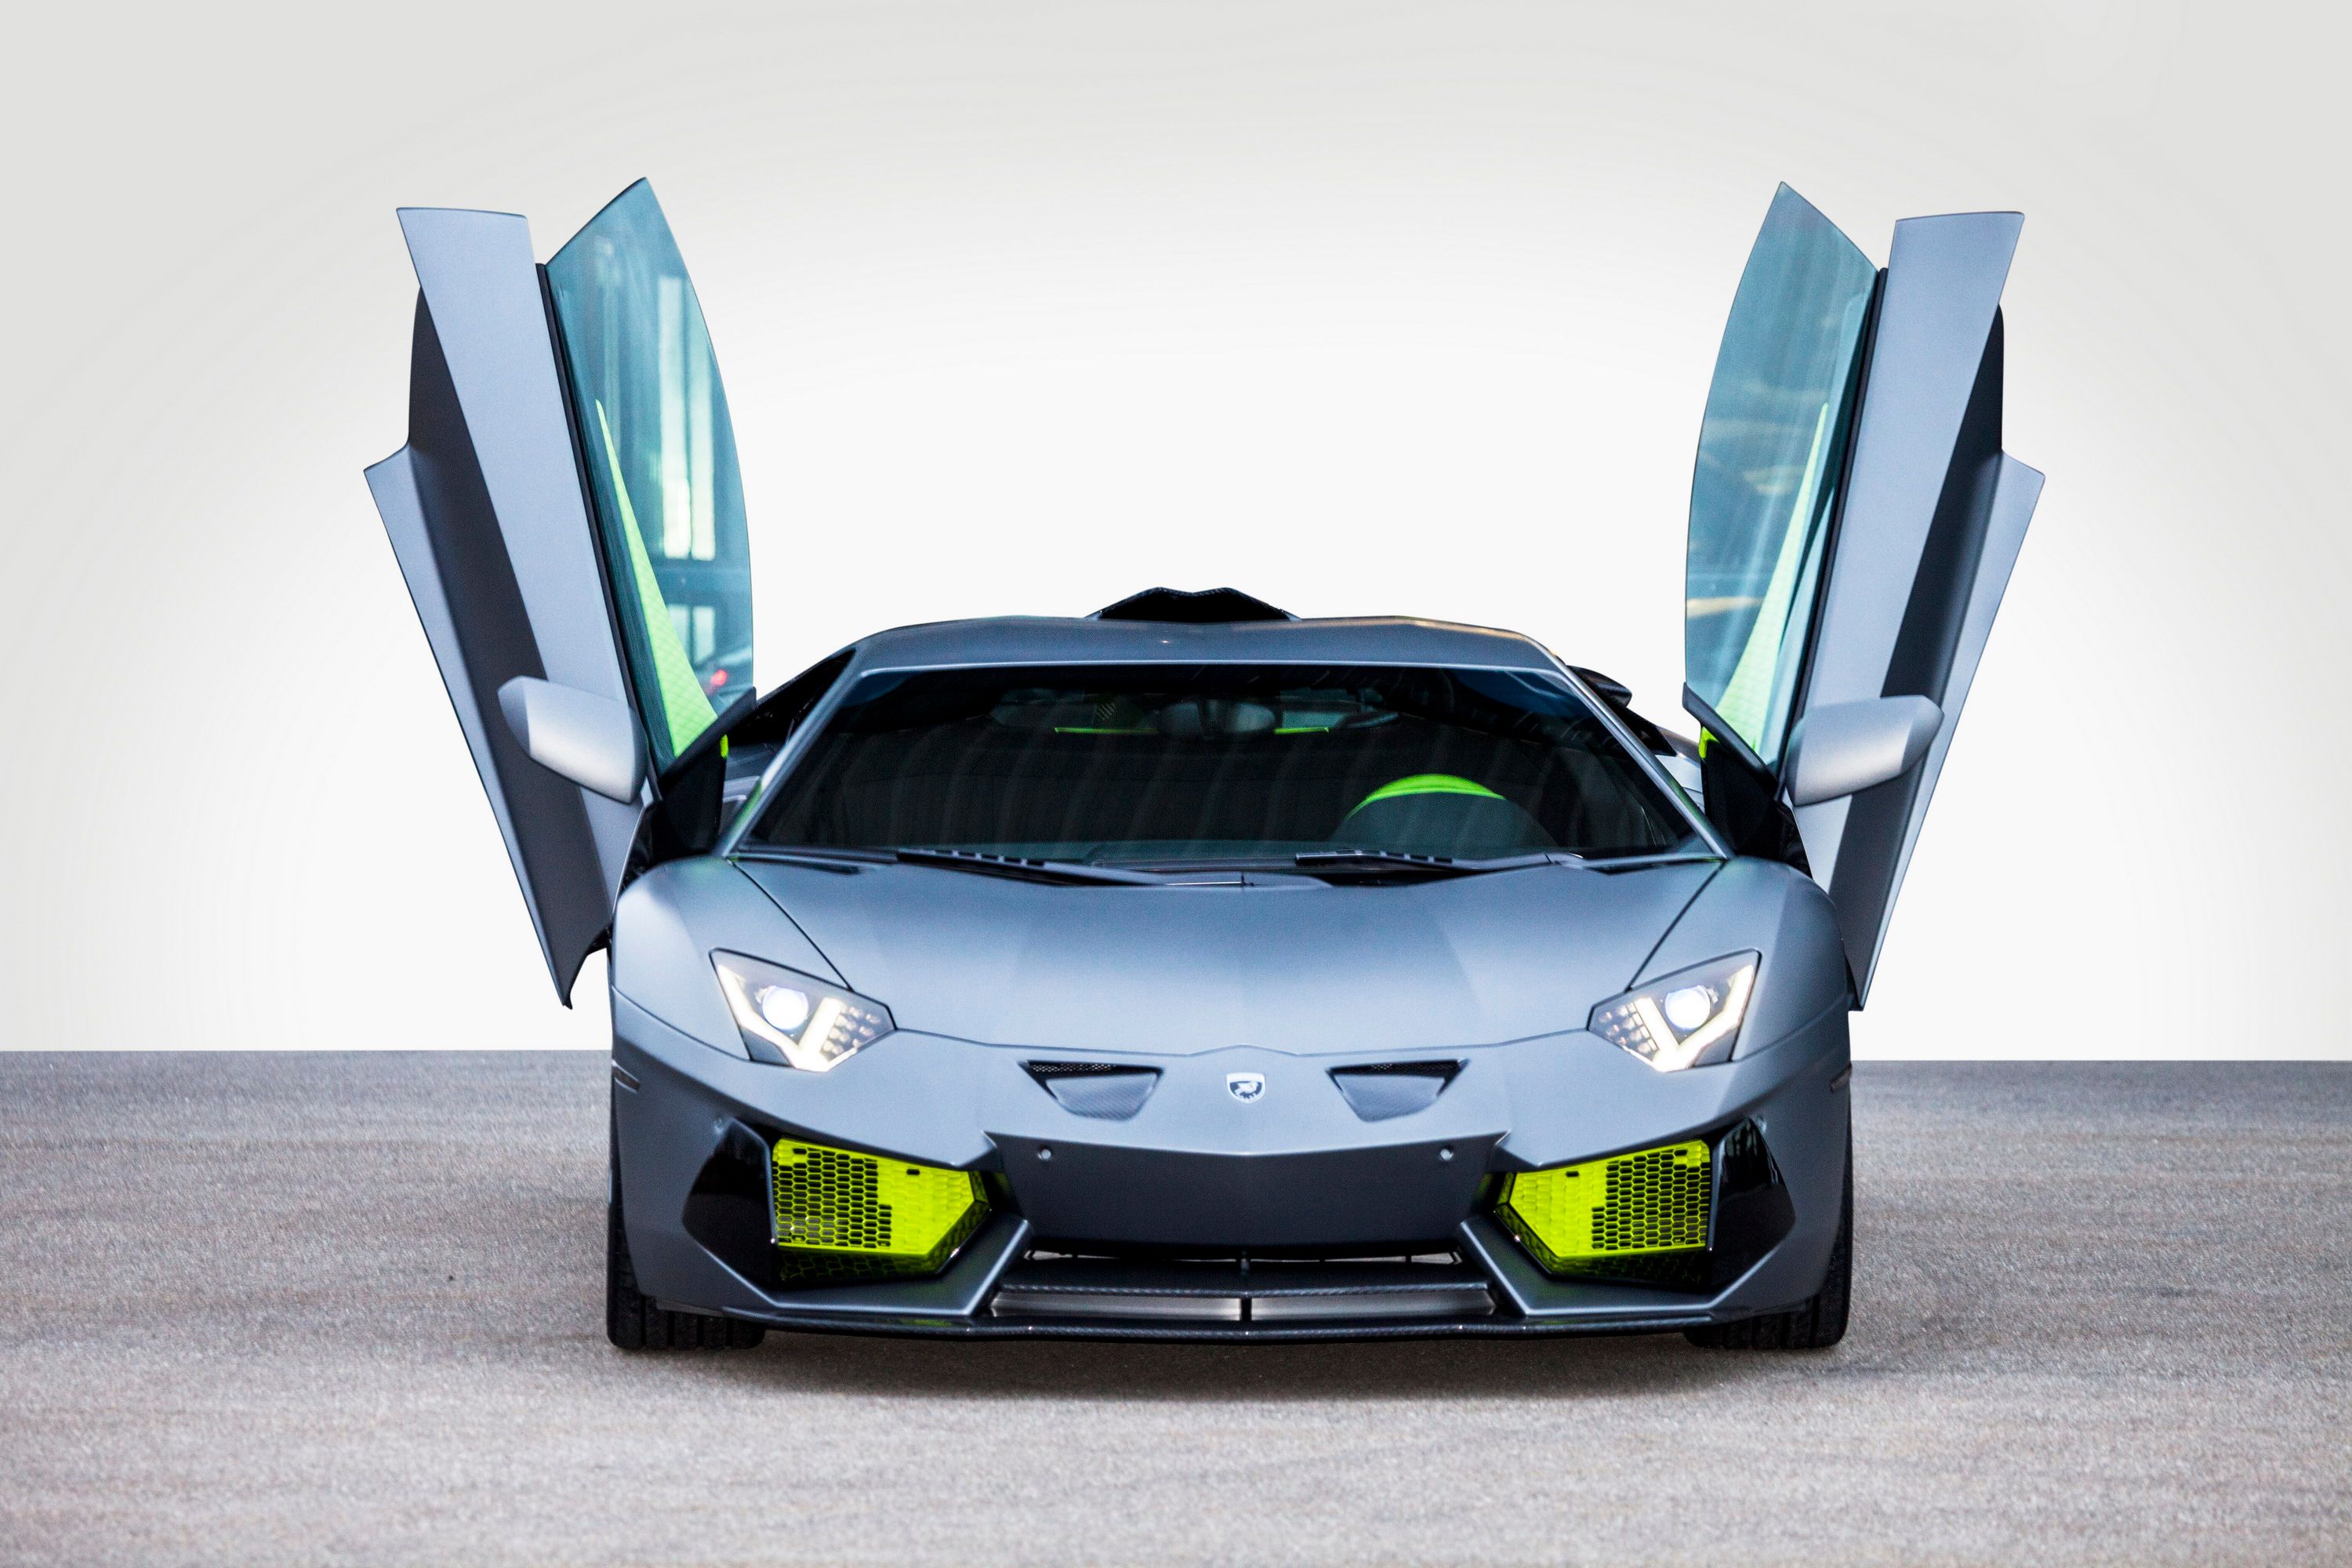 2014 Lamborghini Aventador Limited by Hamann